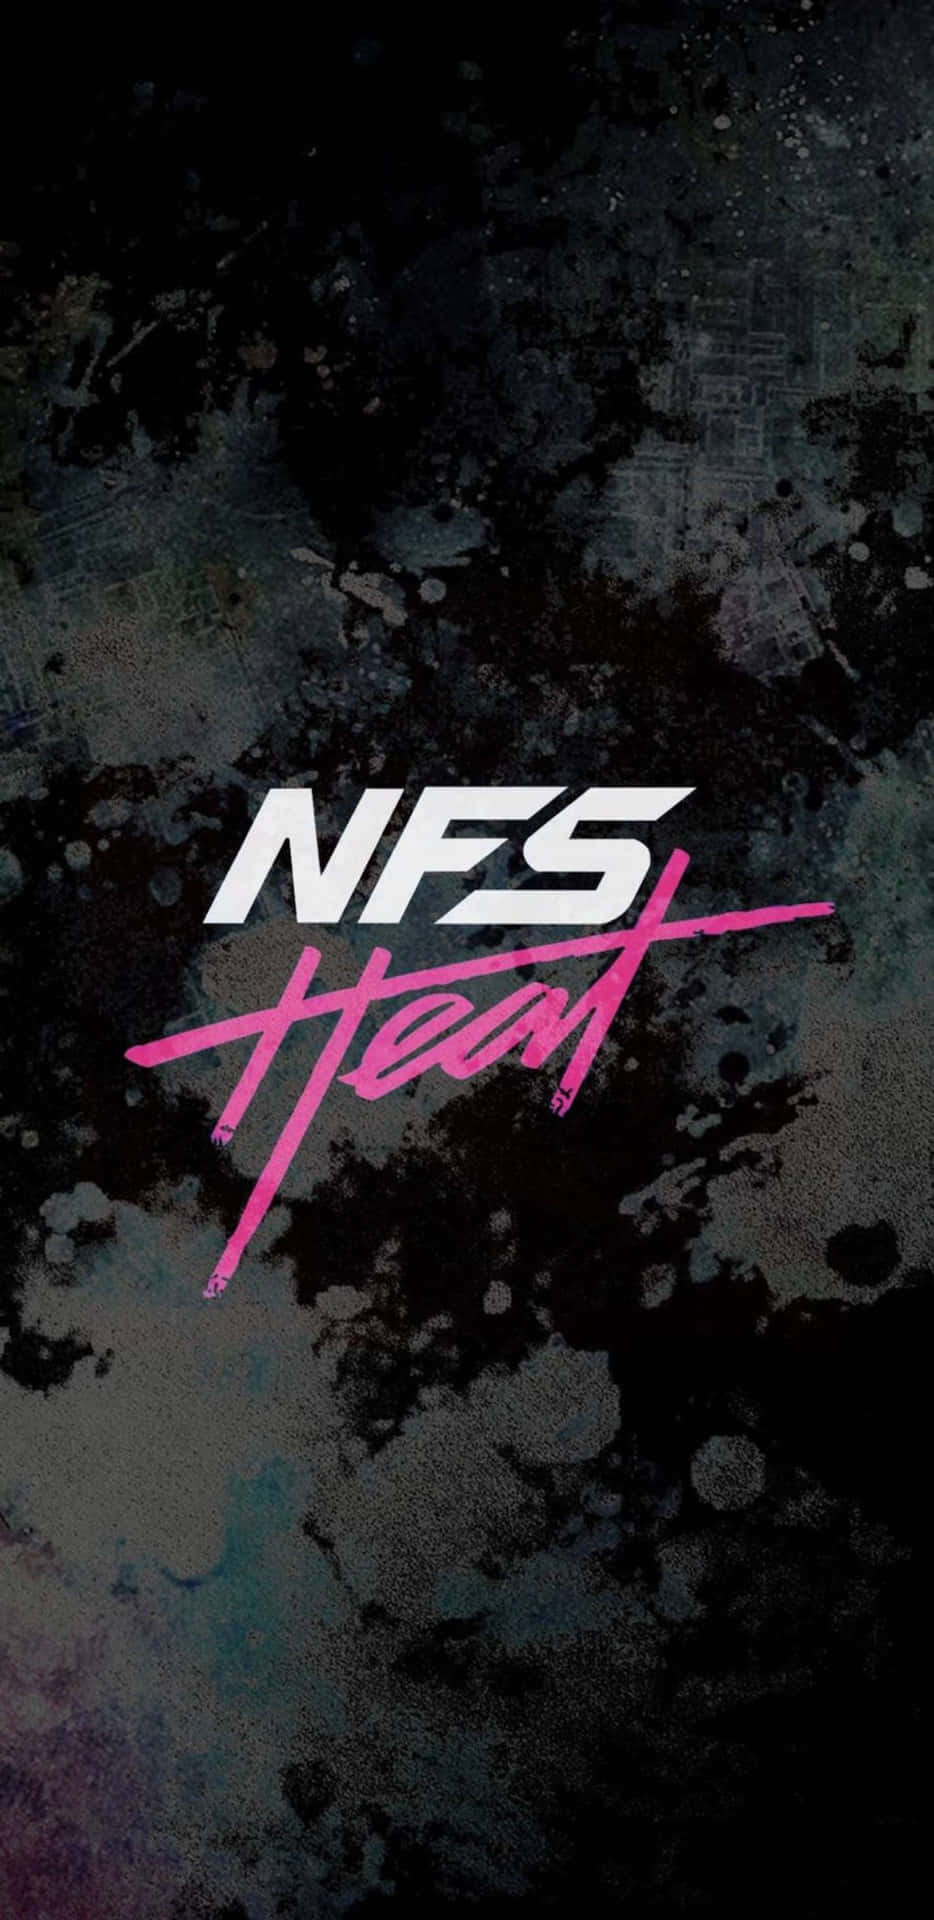 Nfs Heart Logo On A Black Background